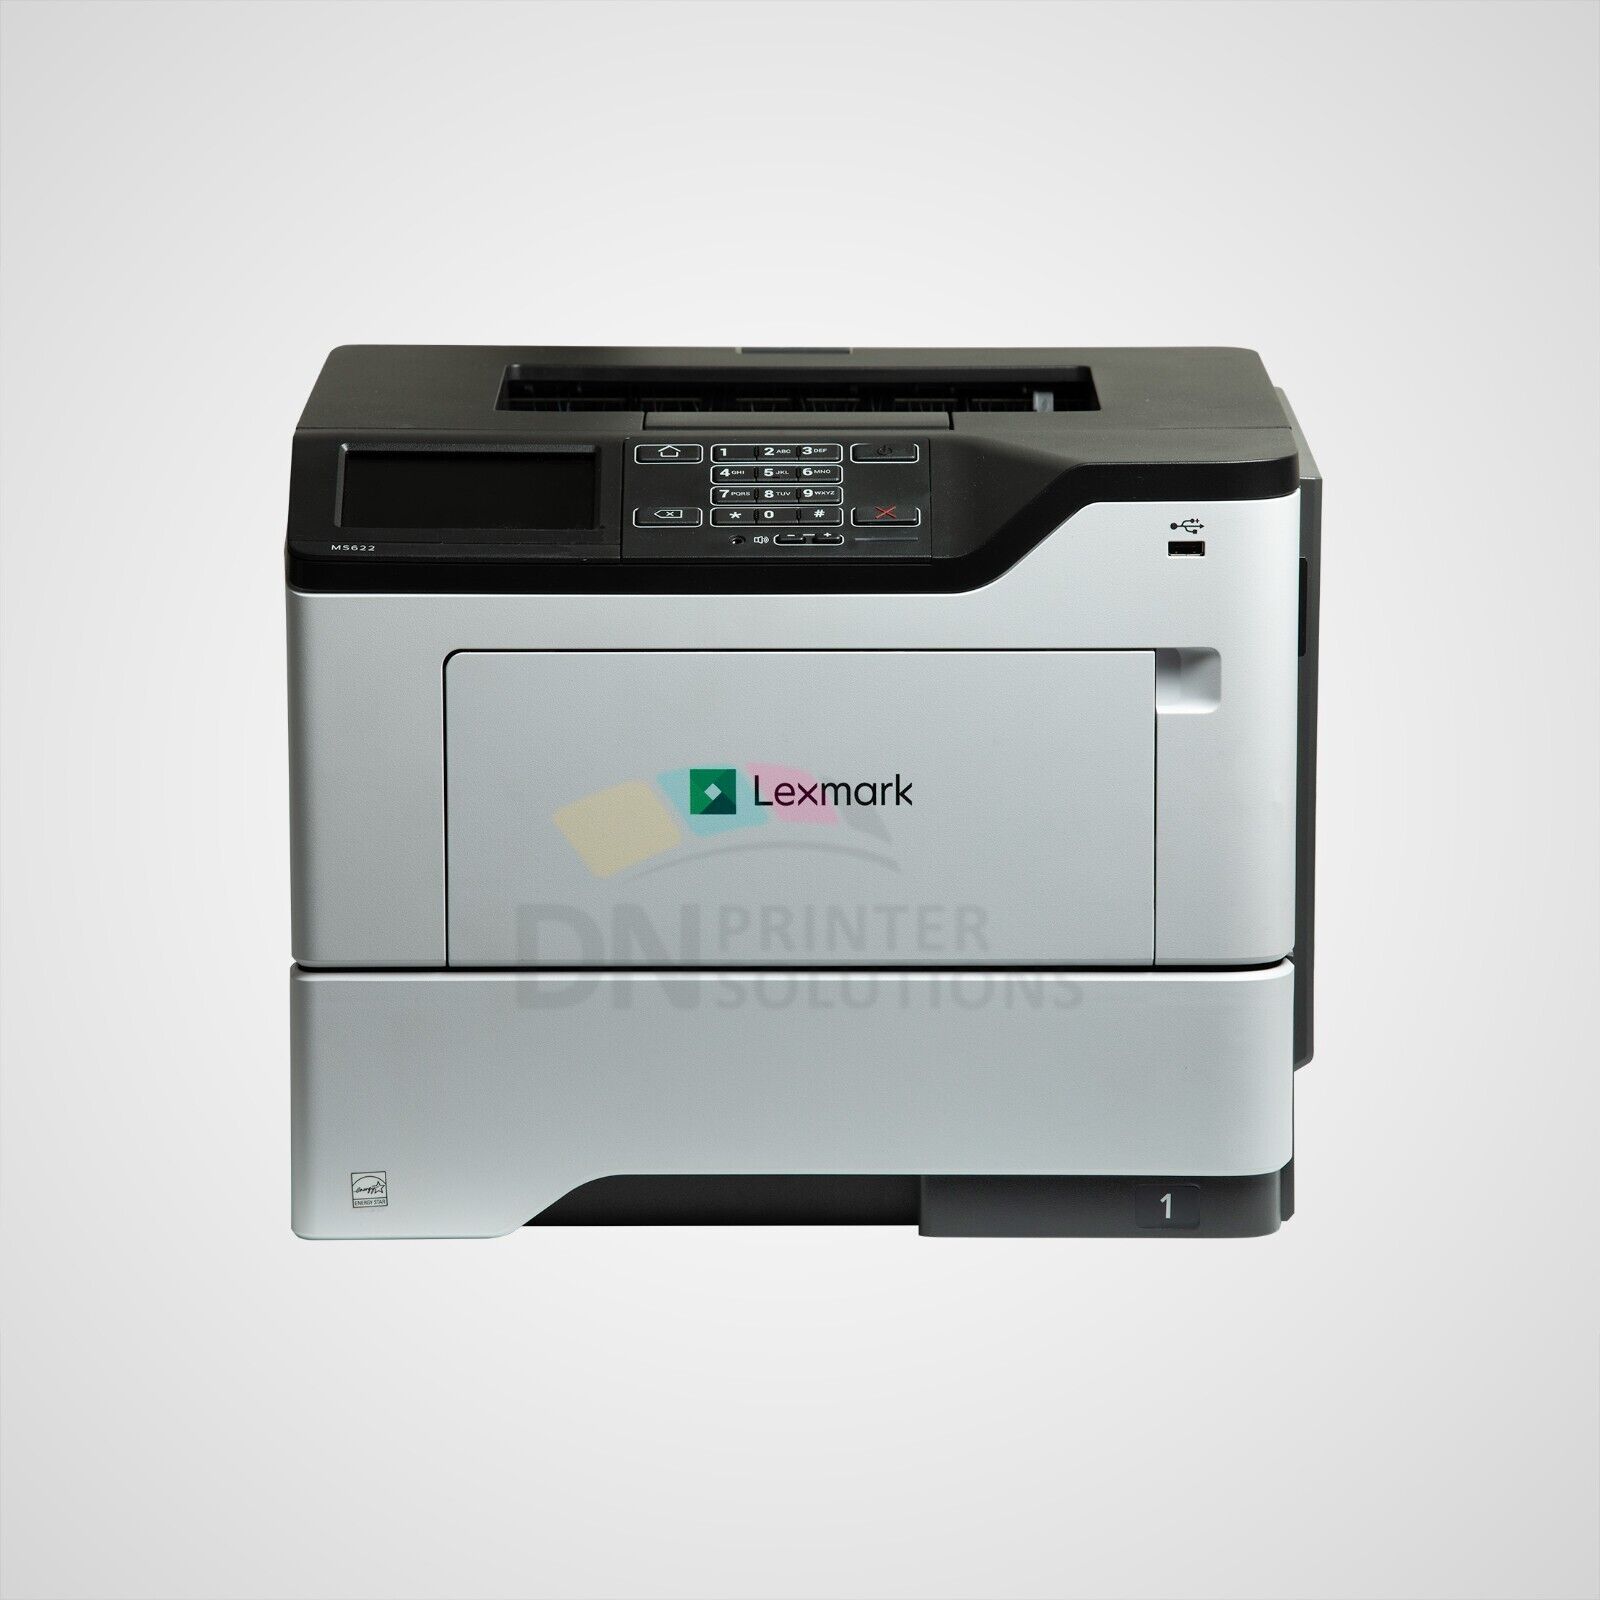 Lexmark MS622de Laser Printer Toner / Drum is NOT Included